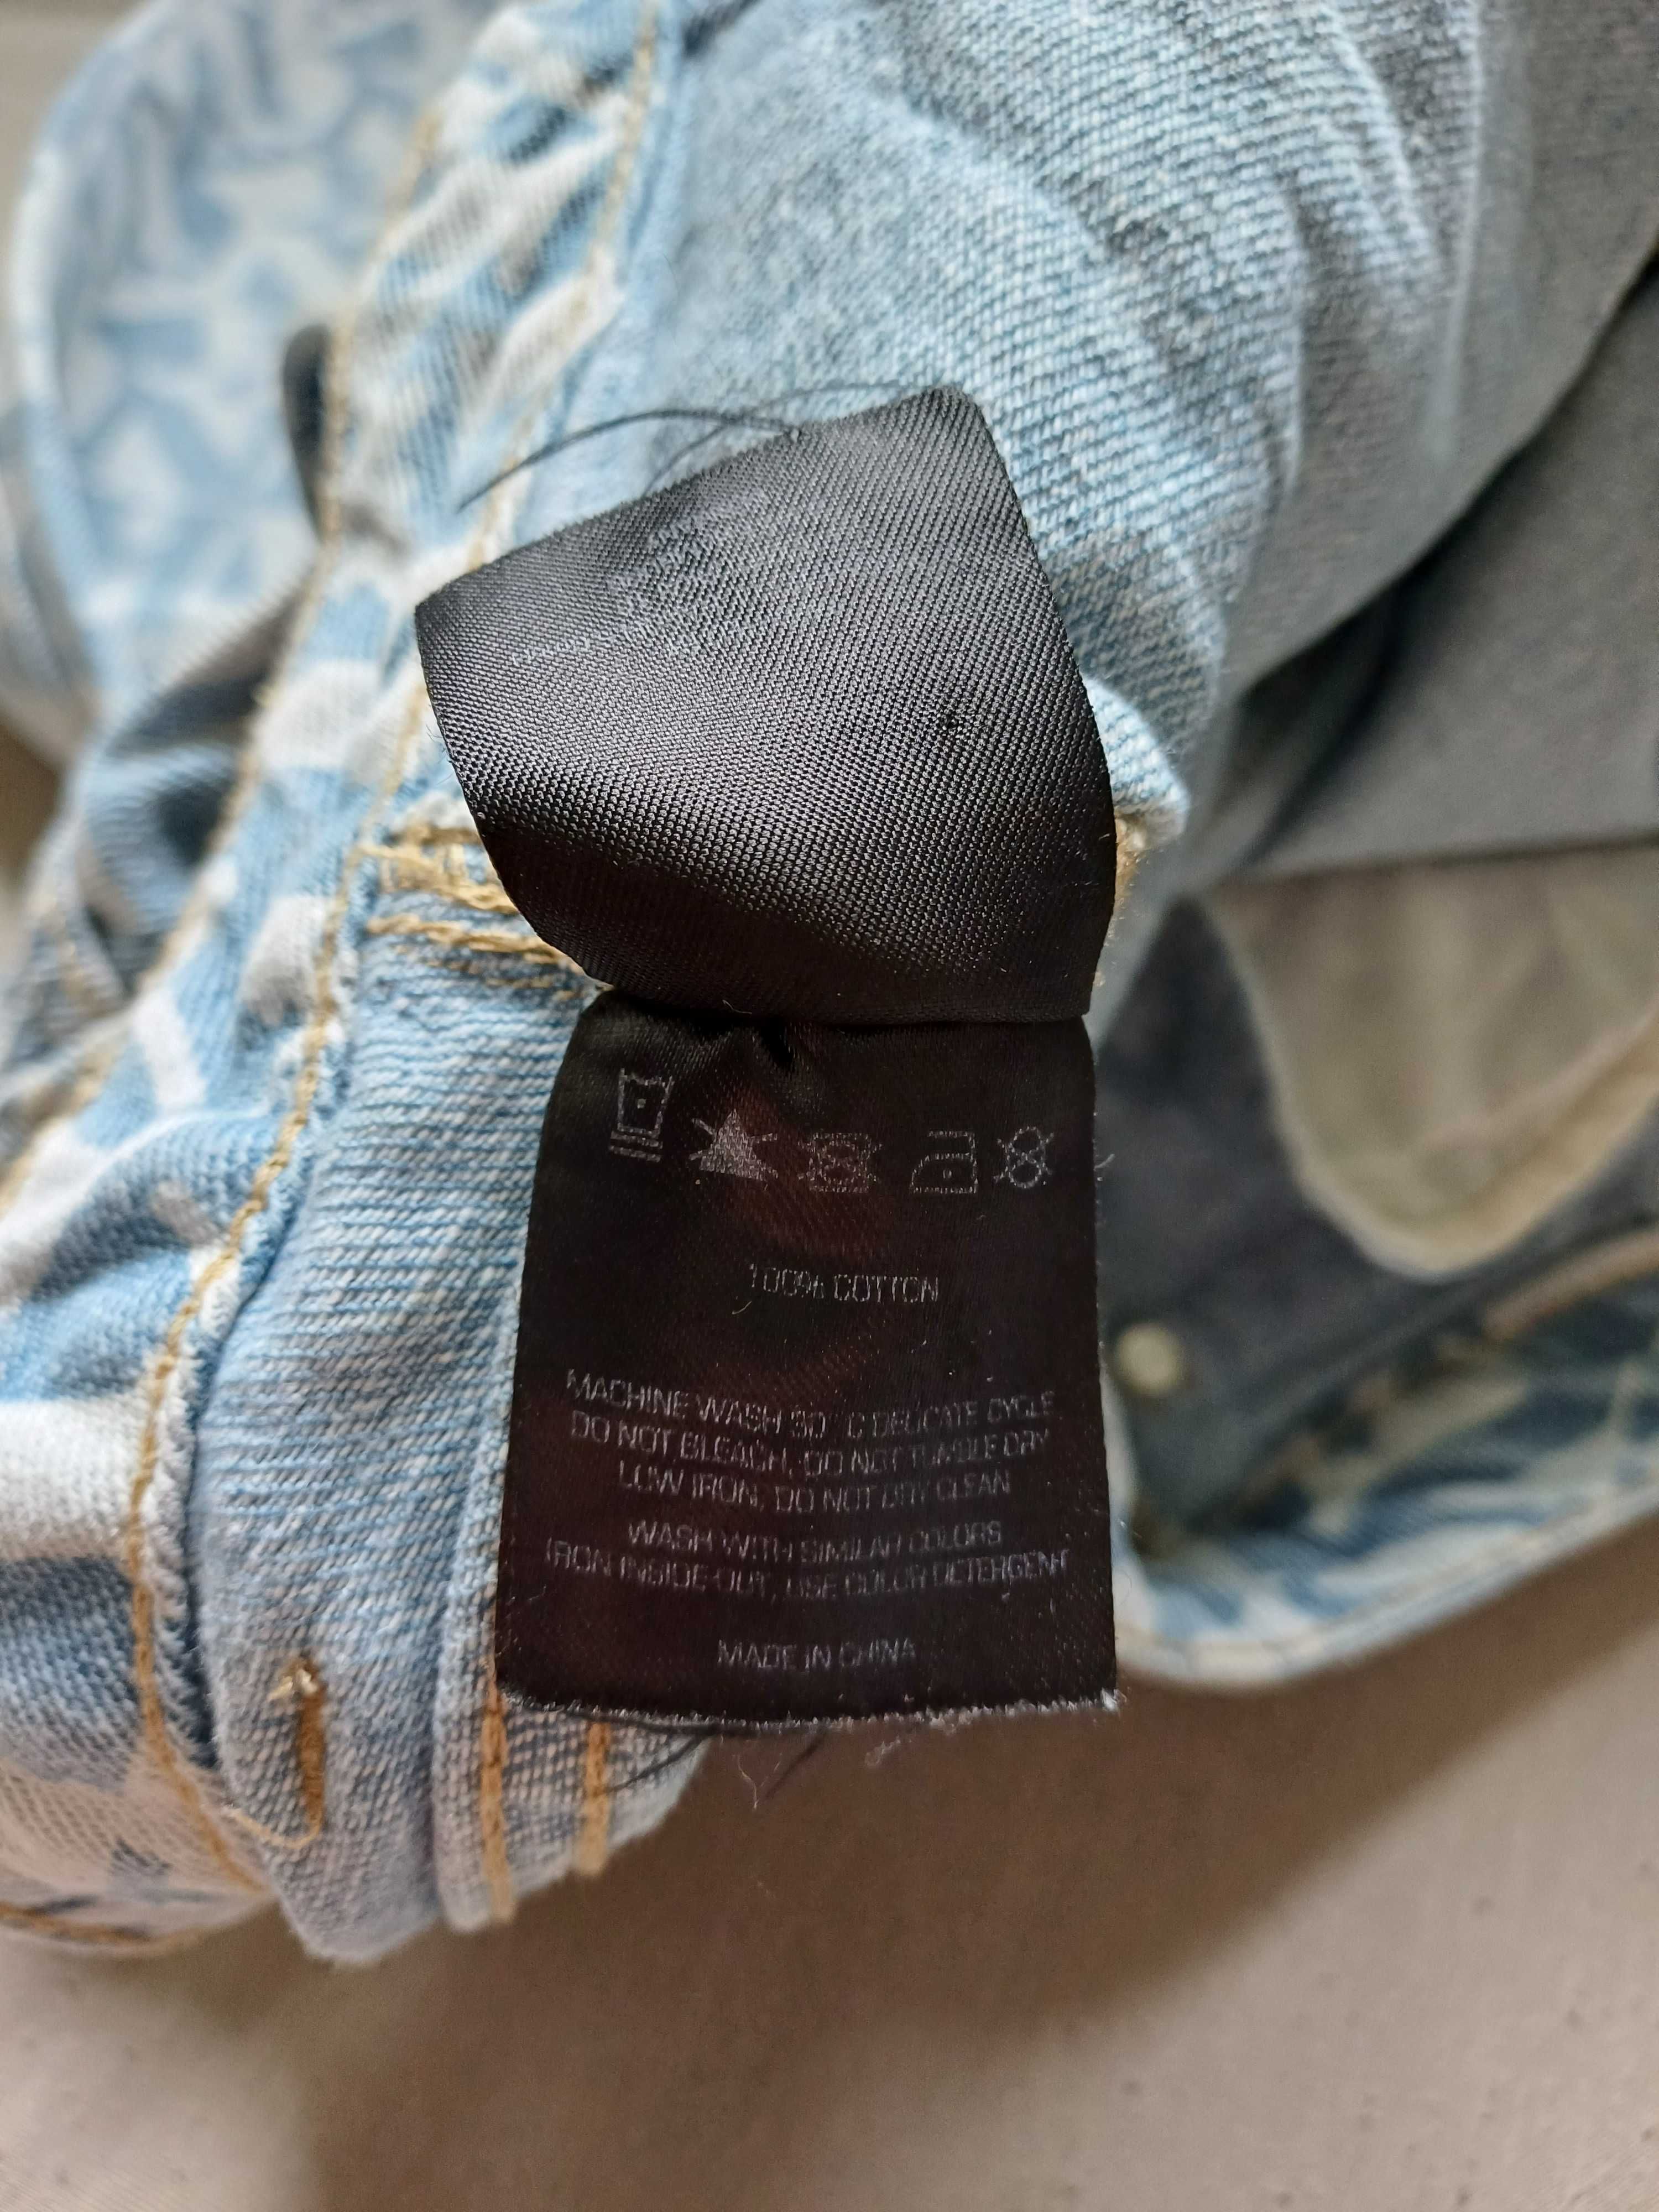 Karl Kani damskie spodnie dżinsy monogram rozmiar M